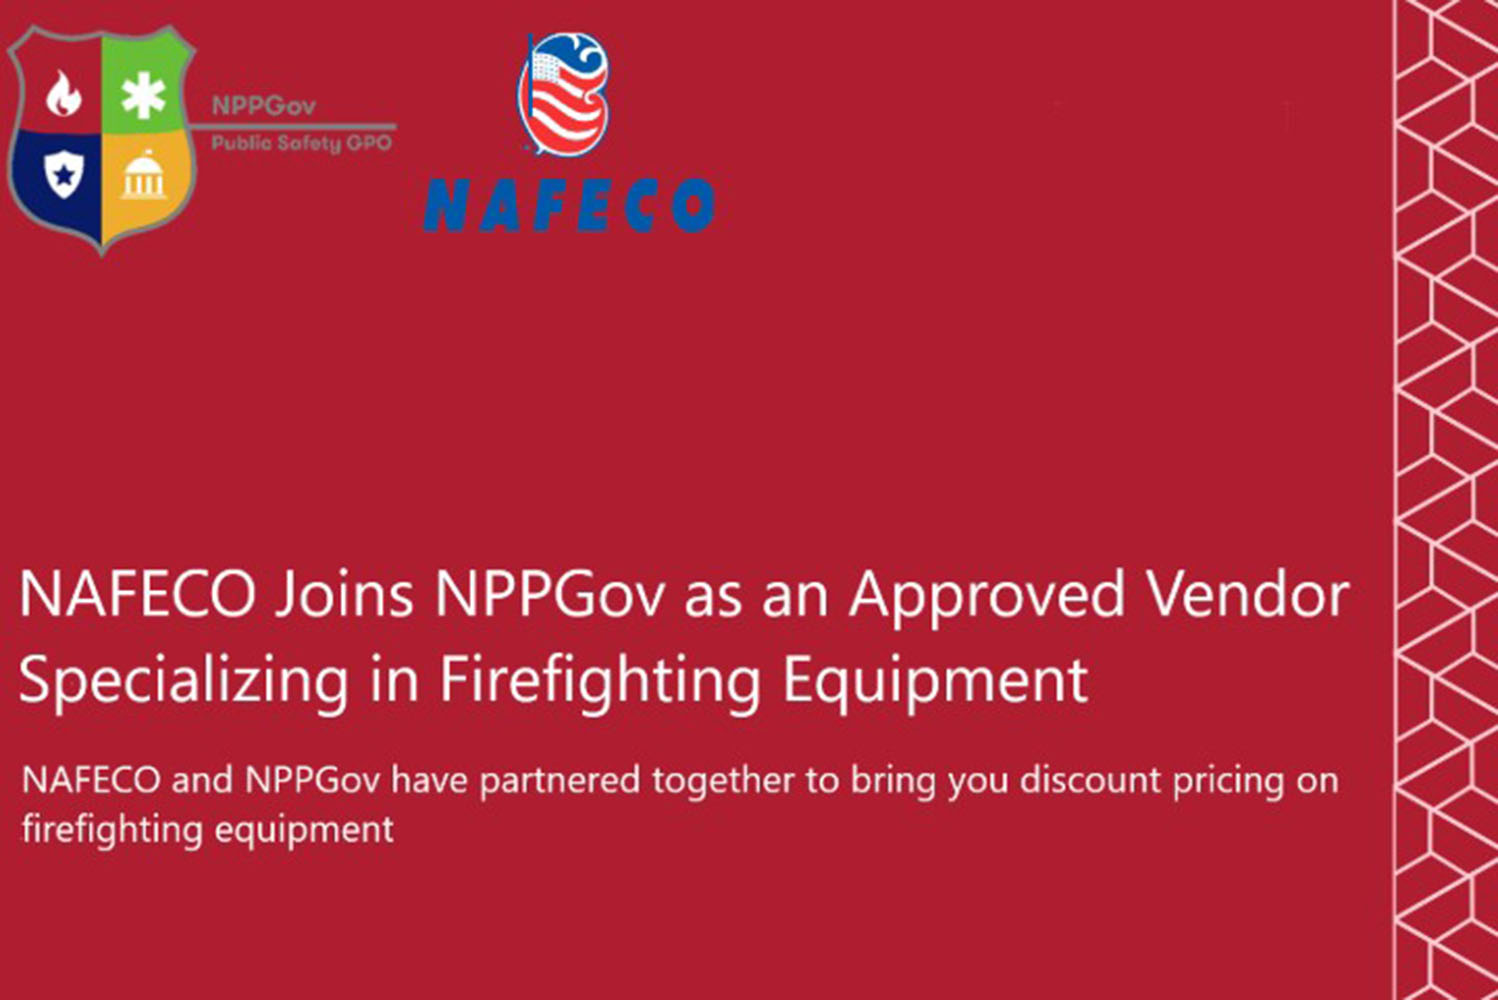 NAFECO Joins NPPGov as Vendor for PPE